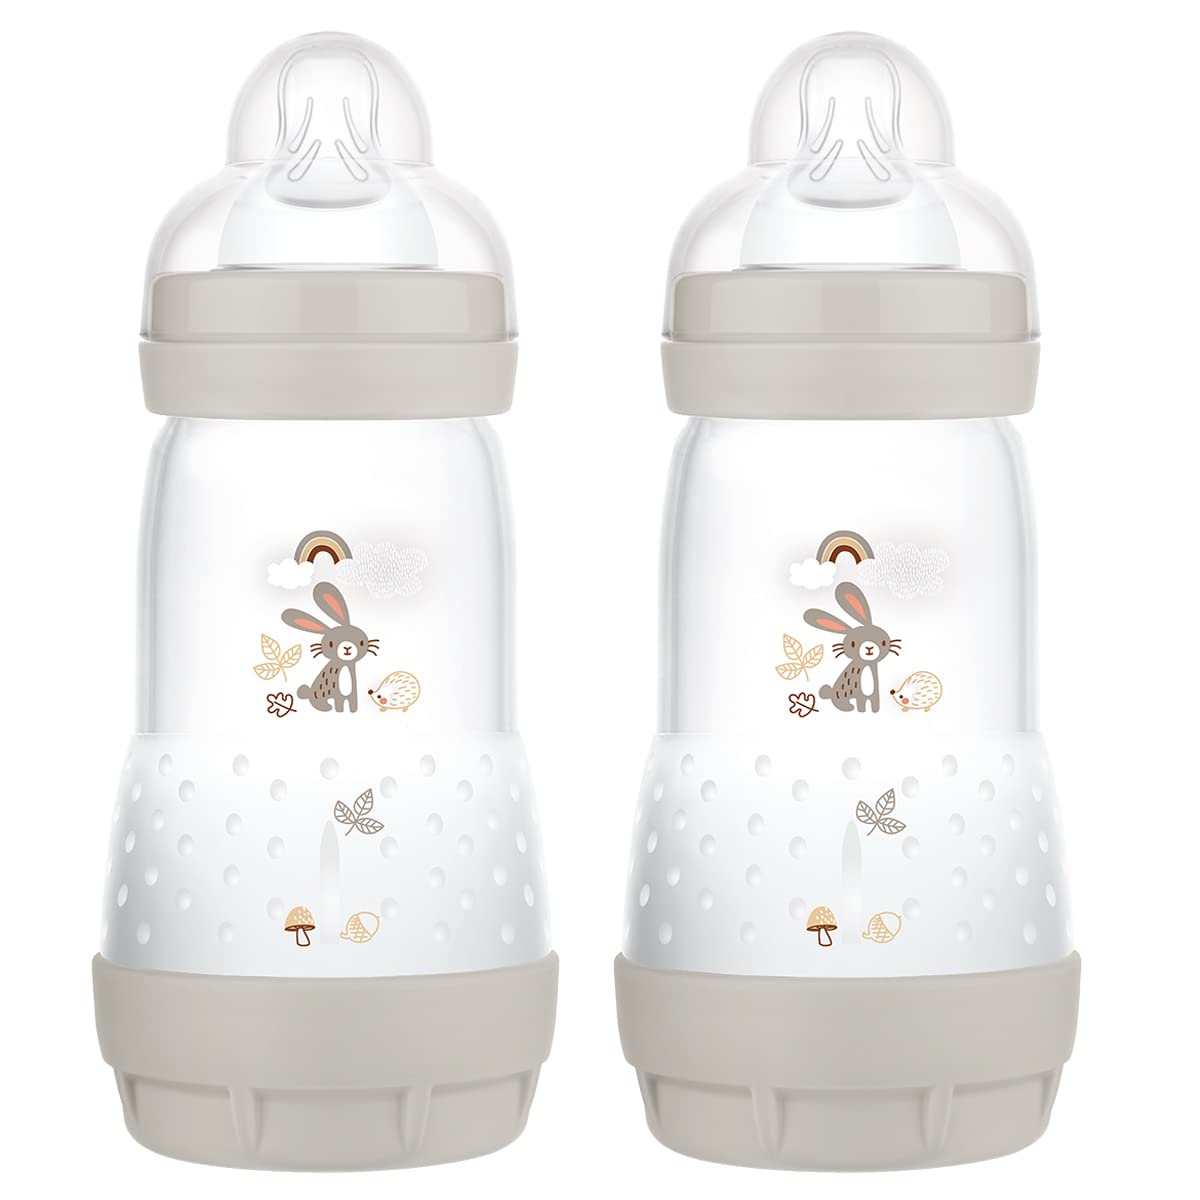 MAM Easy Start Self Sterilising Anti-Colic Baby Bottle Pack of 2 (2 x 260 ml), MAM Bottles with Medium Flow MAM Teats Size 2, Newborn Essentials, Grey (Designs May Vary)